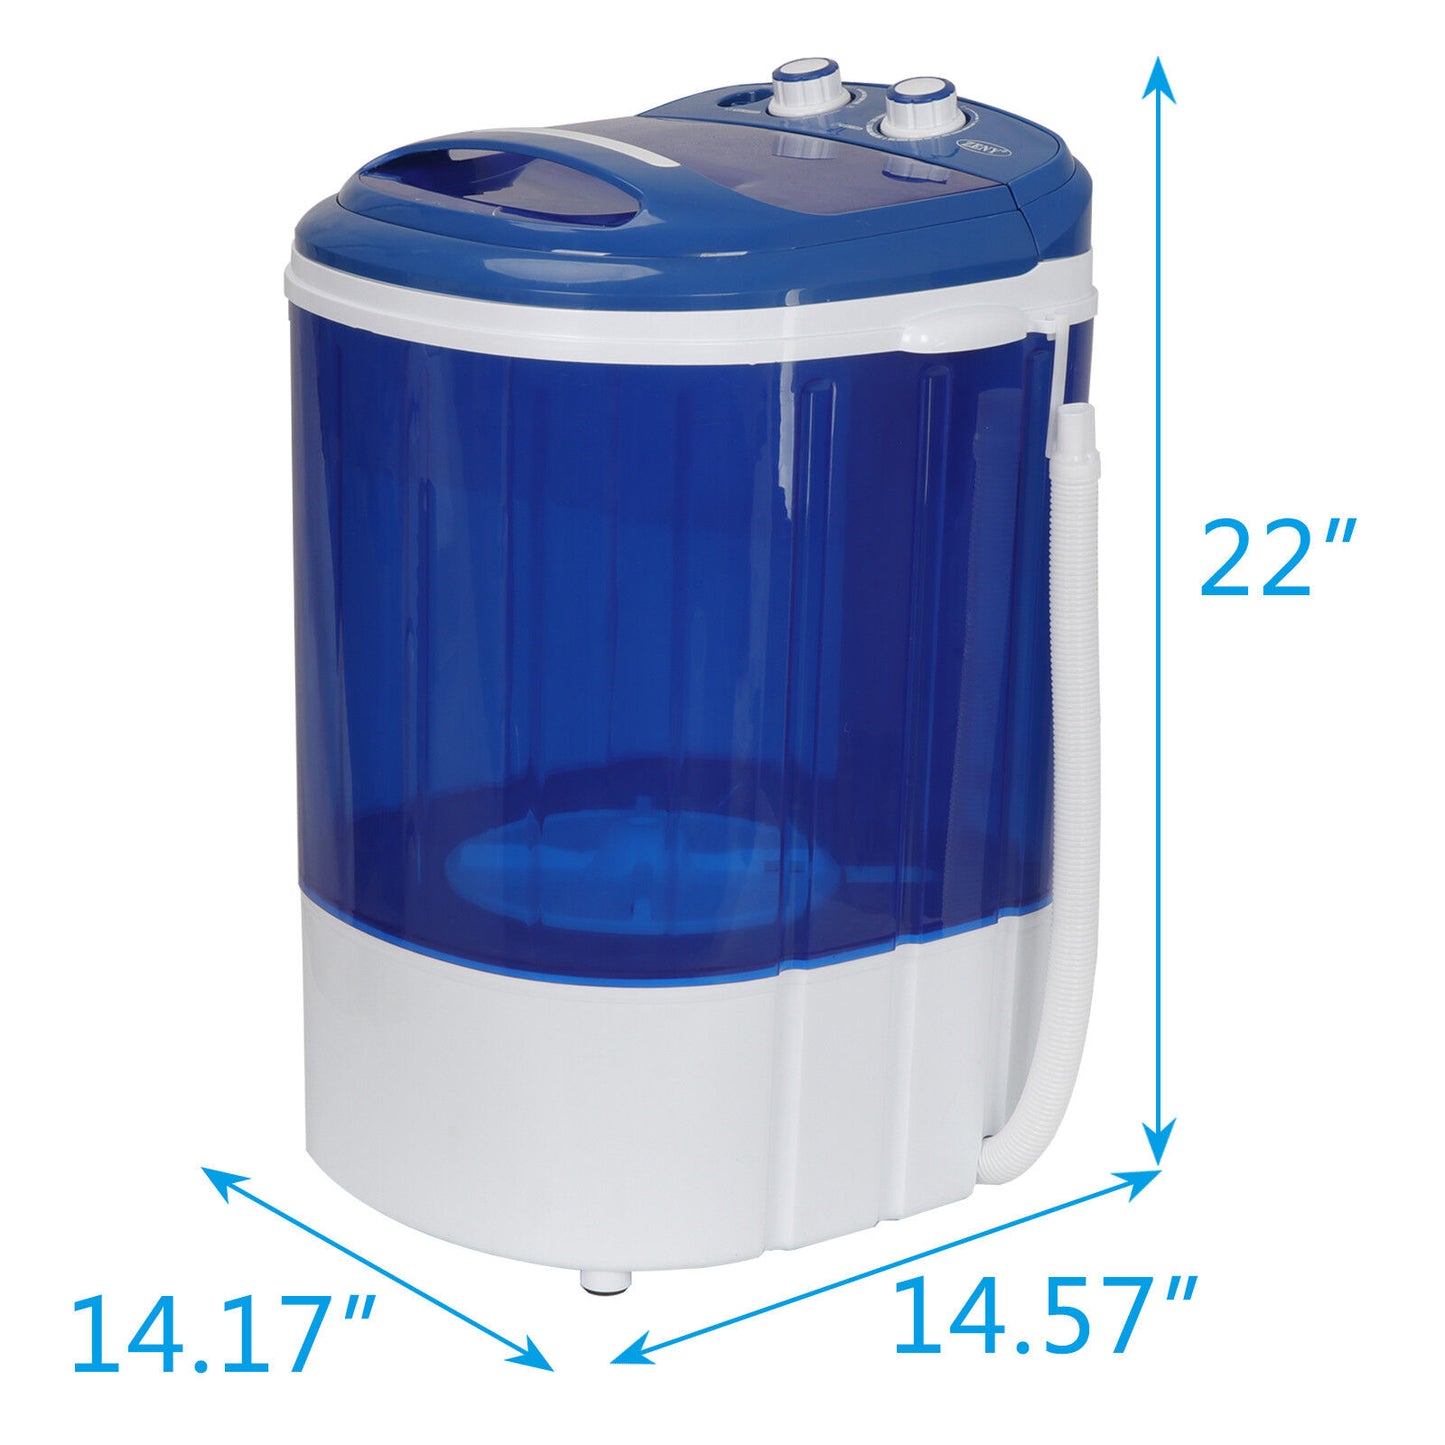 Portable Mini Laundry Washer 7.9 lbs Compact Washing Machine Idea Dorm Rooms